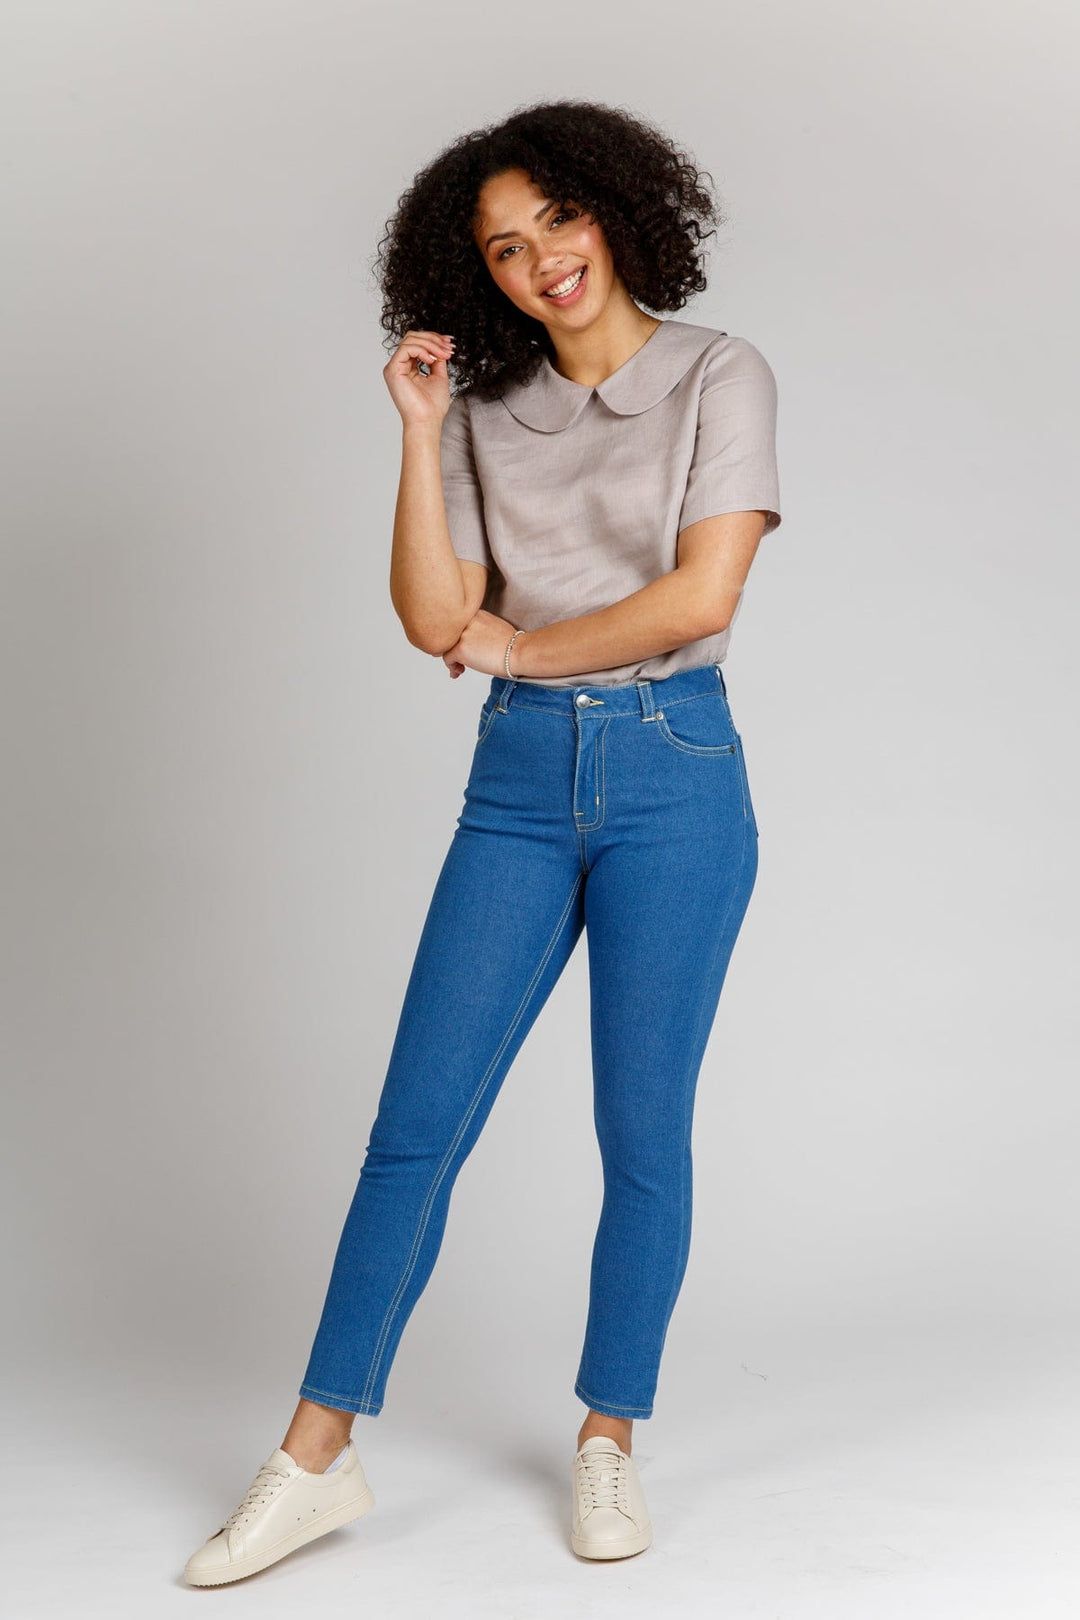 Ash Stretch Jeans - Sizes 0-20 - Megan Nielsen